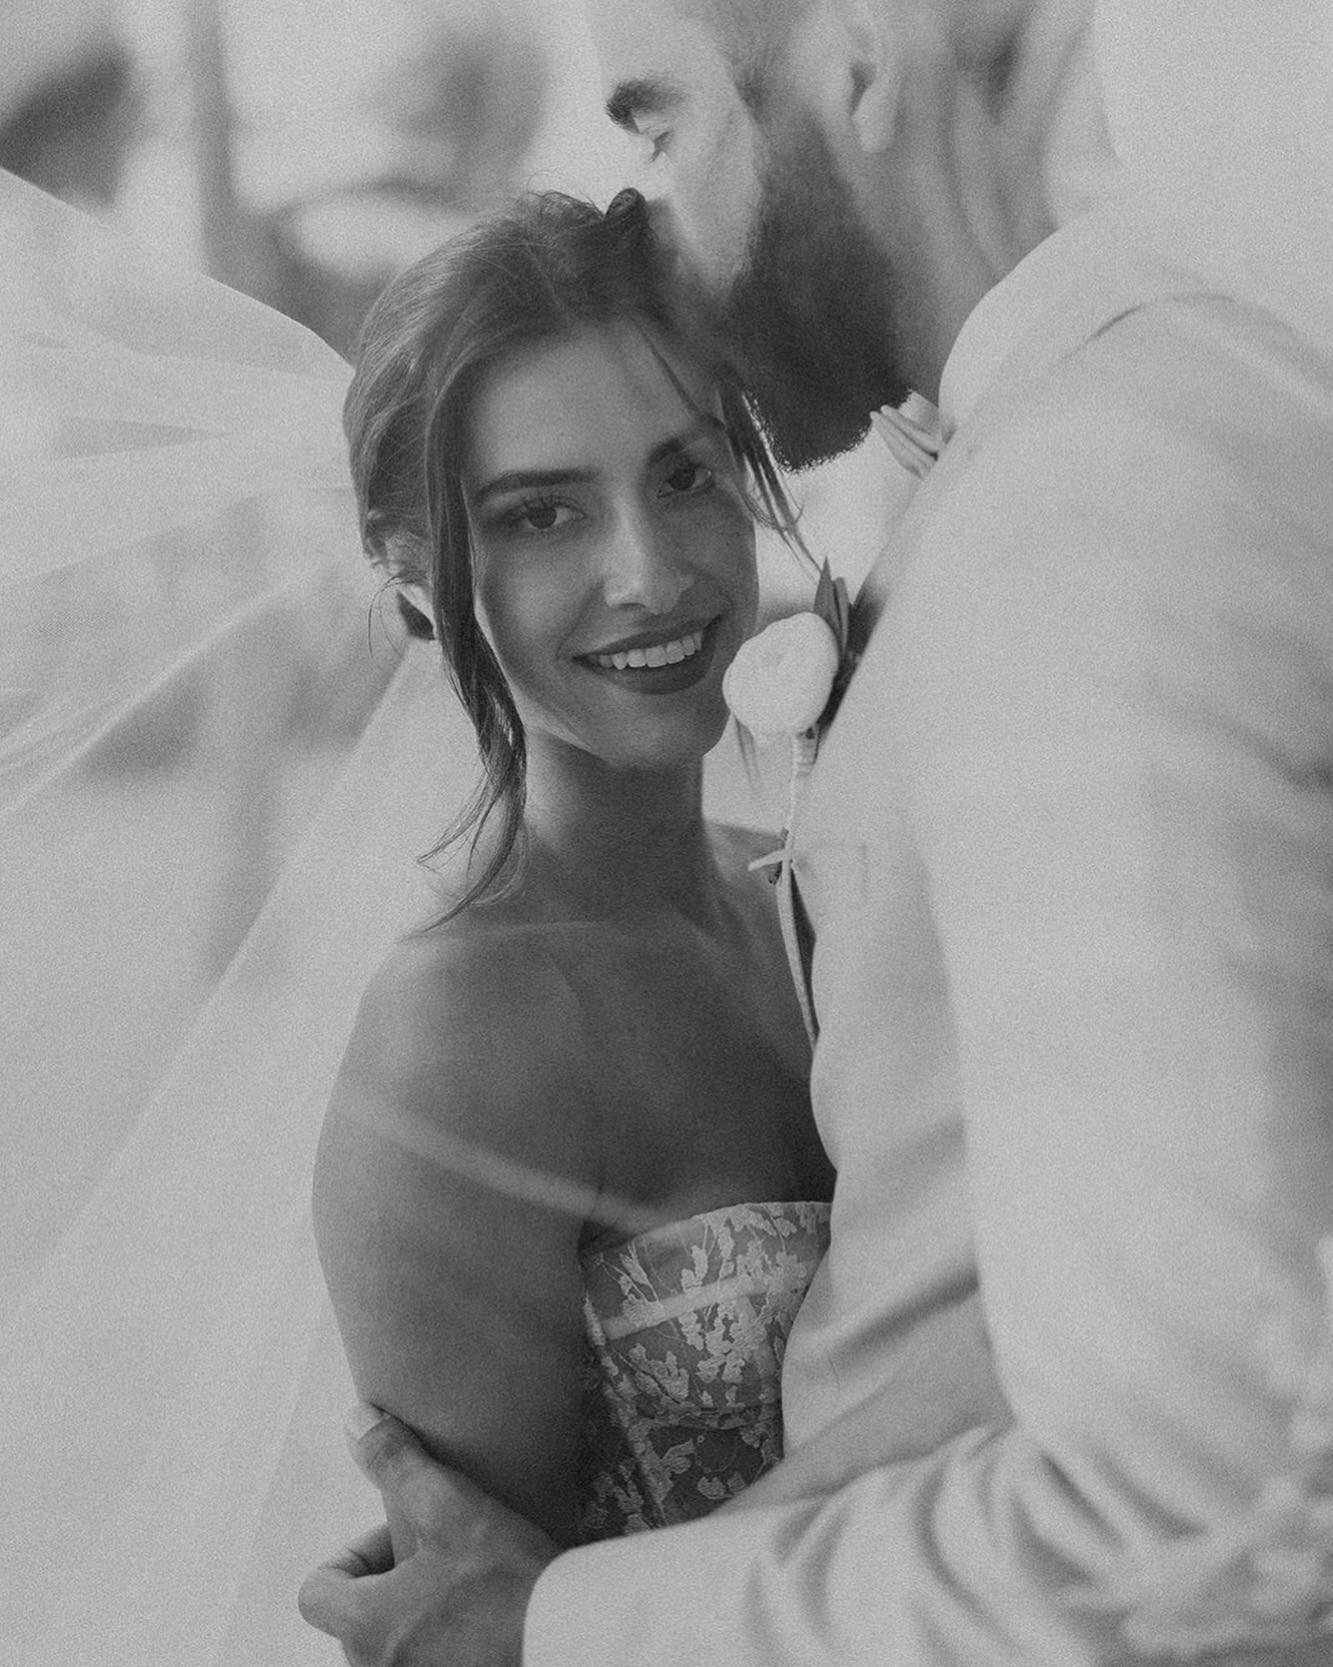 Beautiful ✨ A L E X I S ✨
Shot by super talented @anascaparone 
Wedding by @sosweddingplanners 
.
.
.
.
.
.
.
.
.
#hiltontulum #hilton #tulum #bridal #brides #makeup #makeupartist #beauty #bride #bridalinspiration #bridalinspo #wedding #weddingdress 